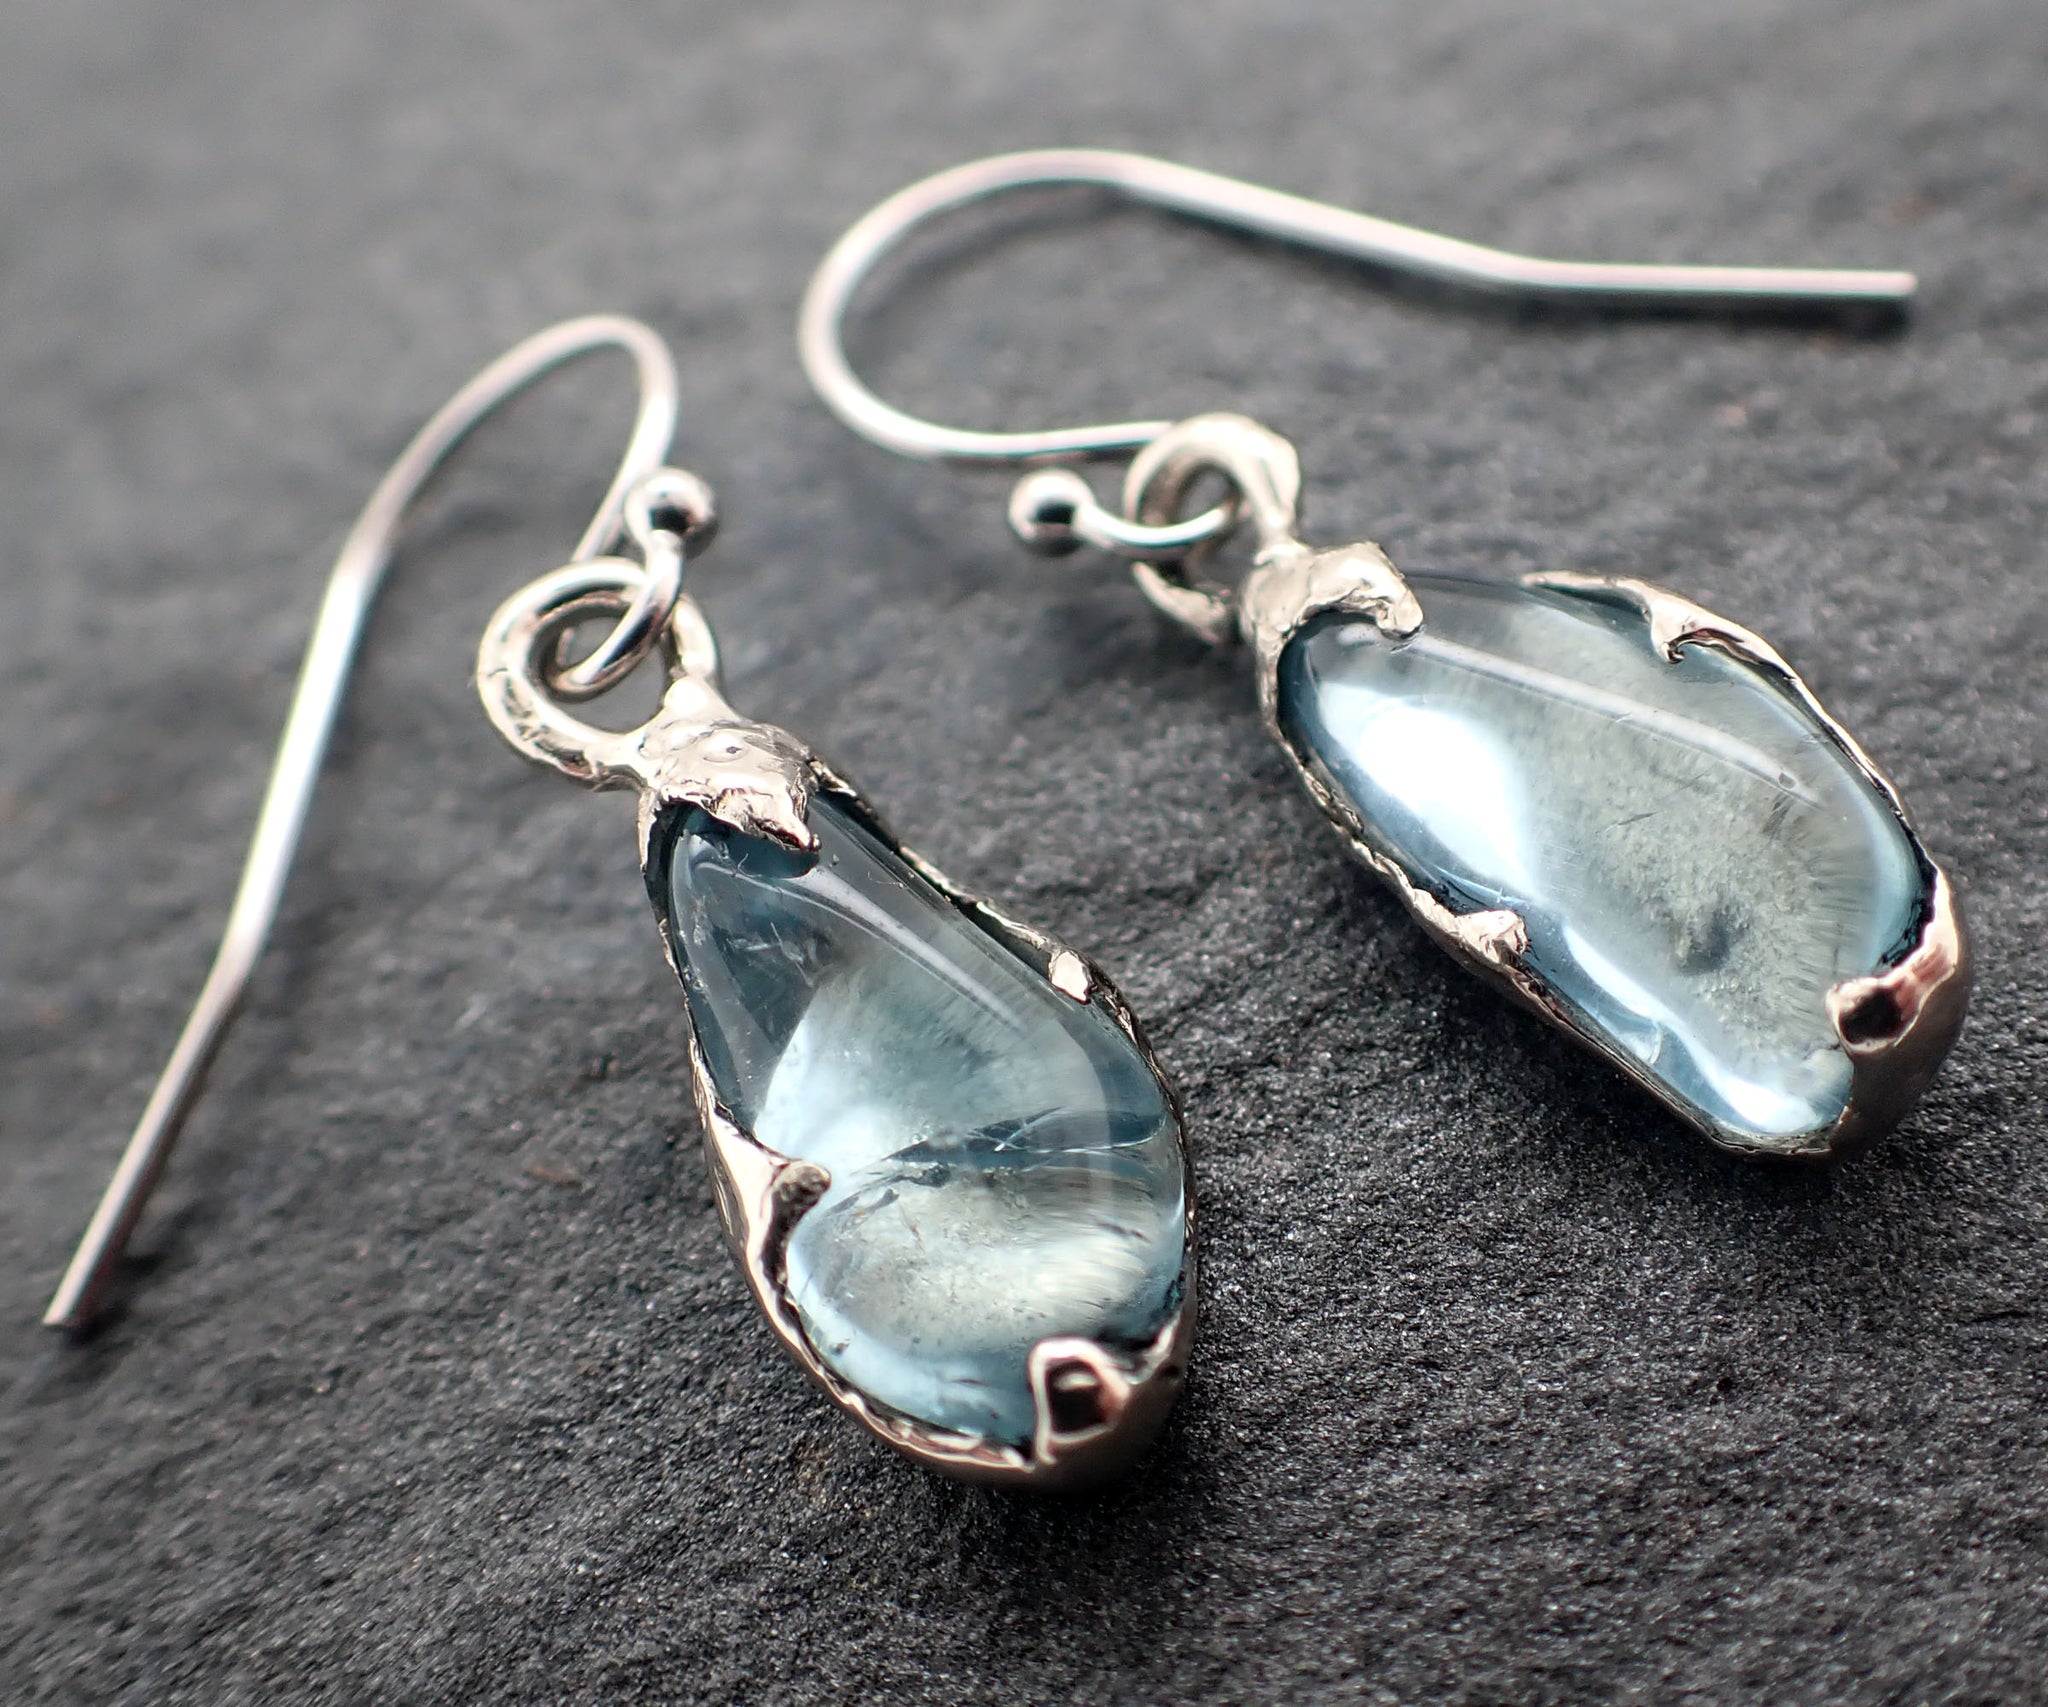 aquamarine pebble candy earrings dangle white 14k 2717 Alternative Engagement